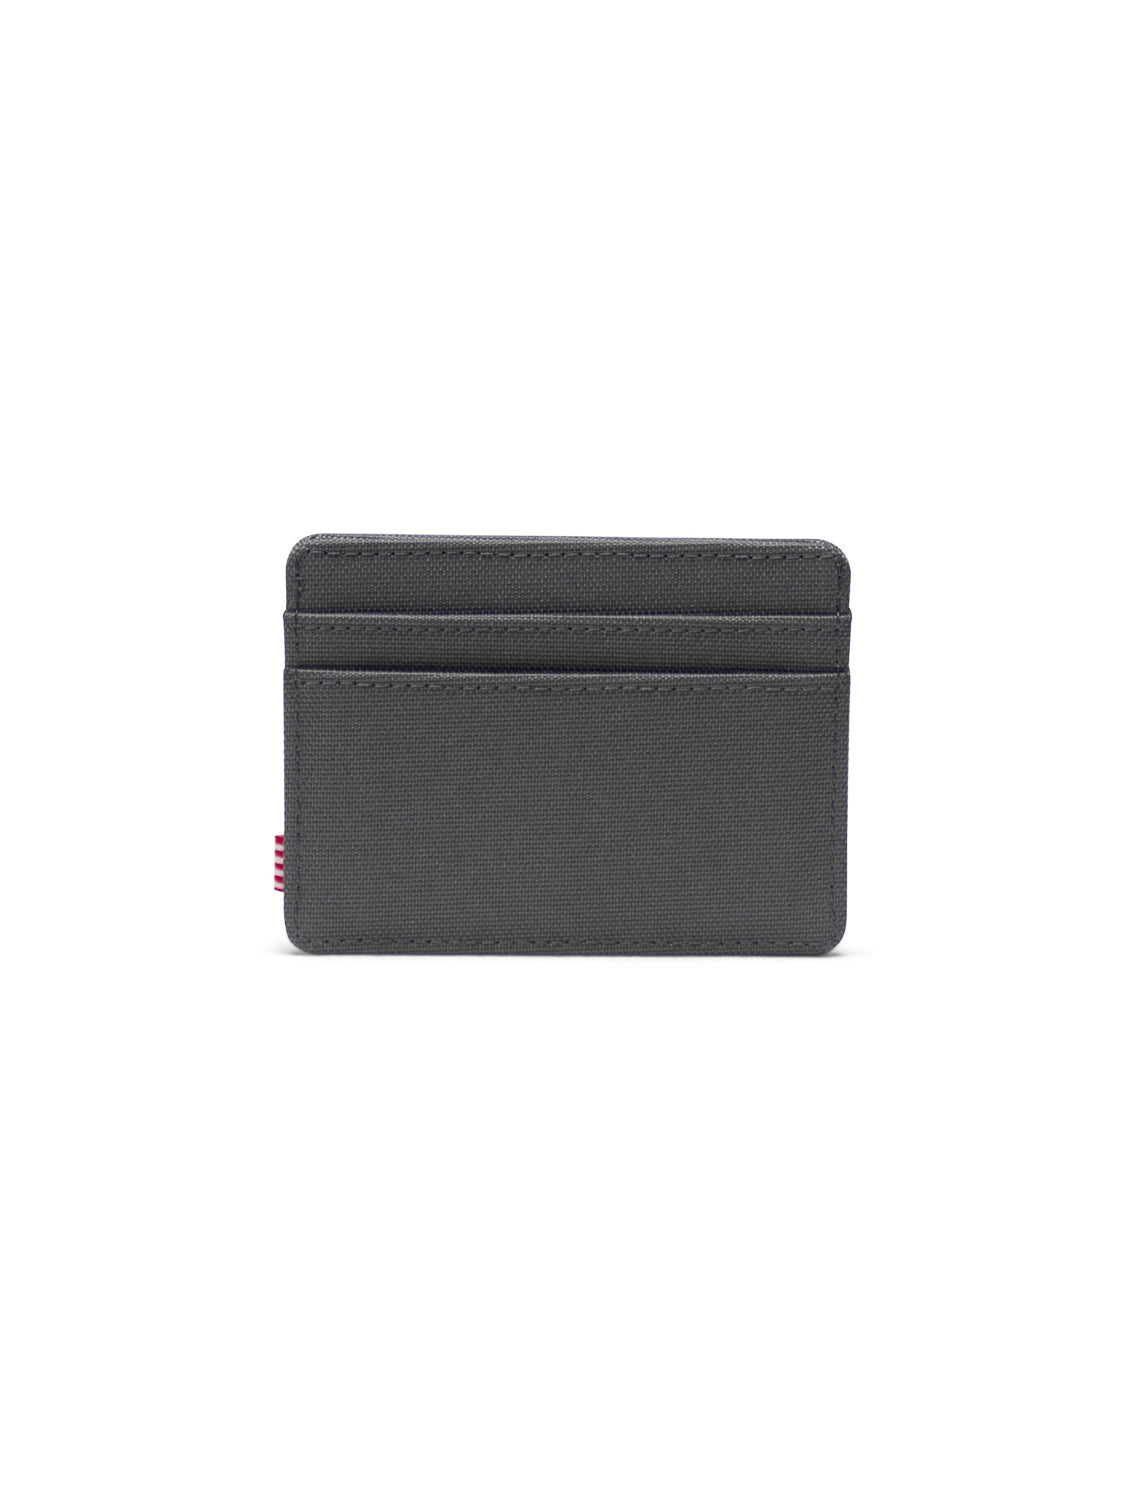 Herschel Charlie Compact Card Holder Wallet